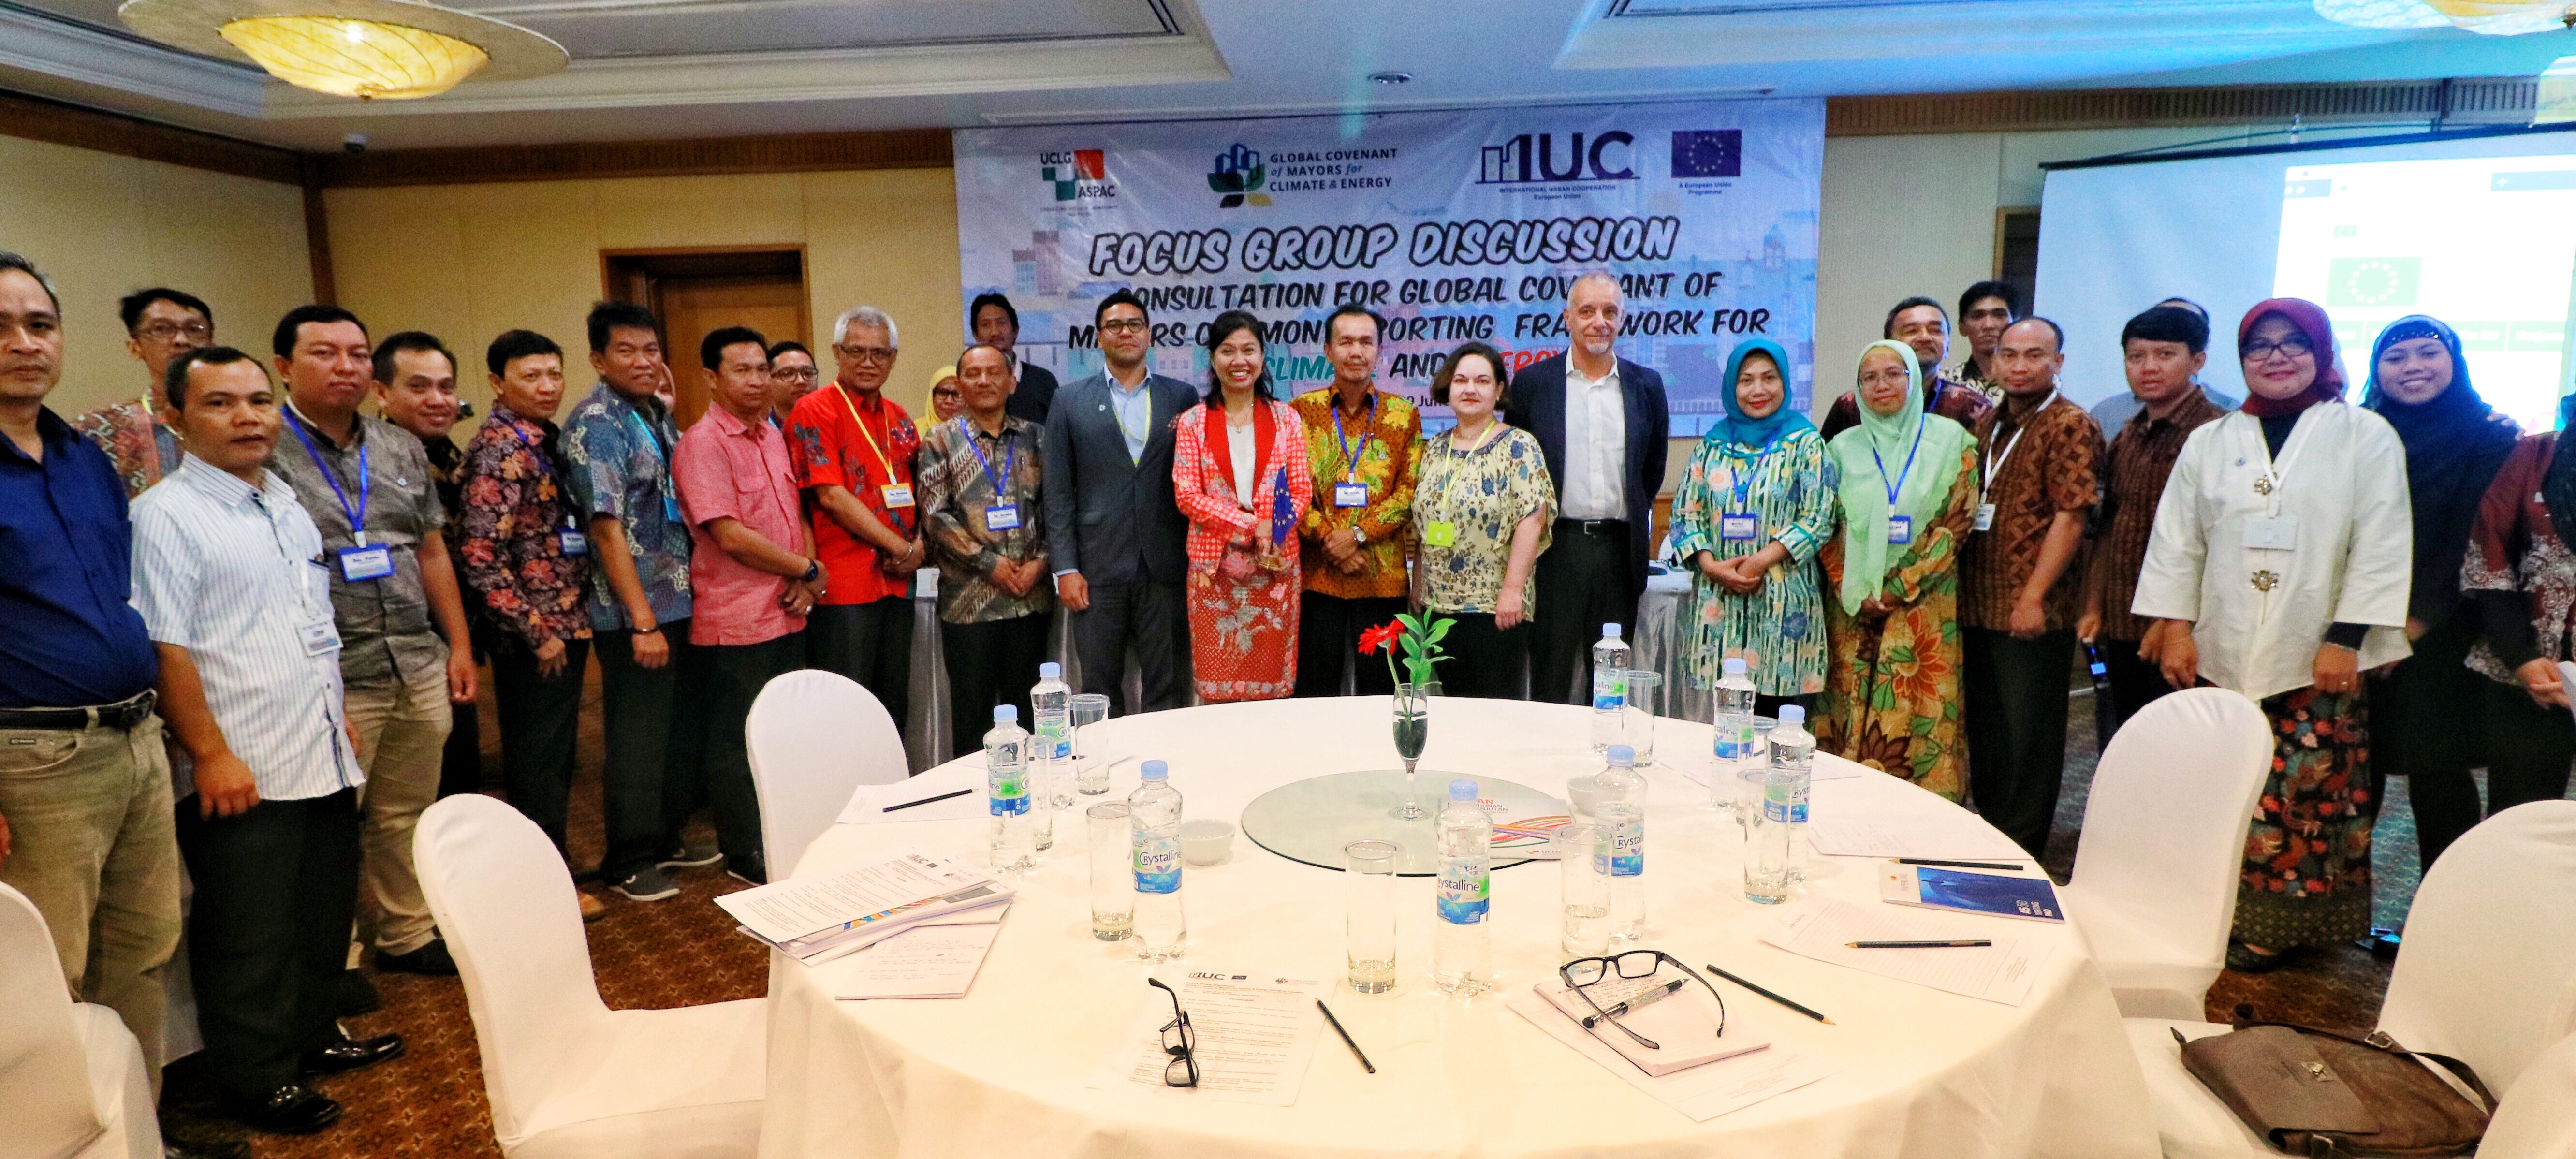 GCoM Meeting in Indonesia